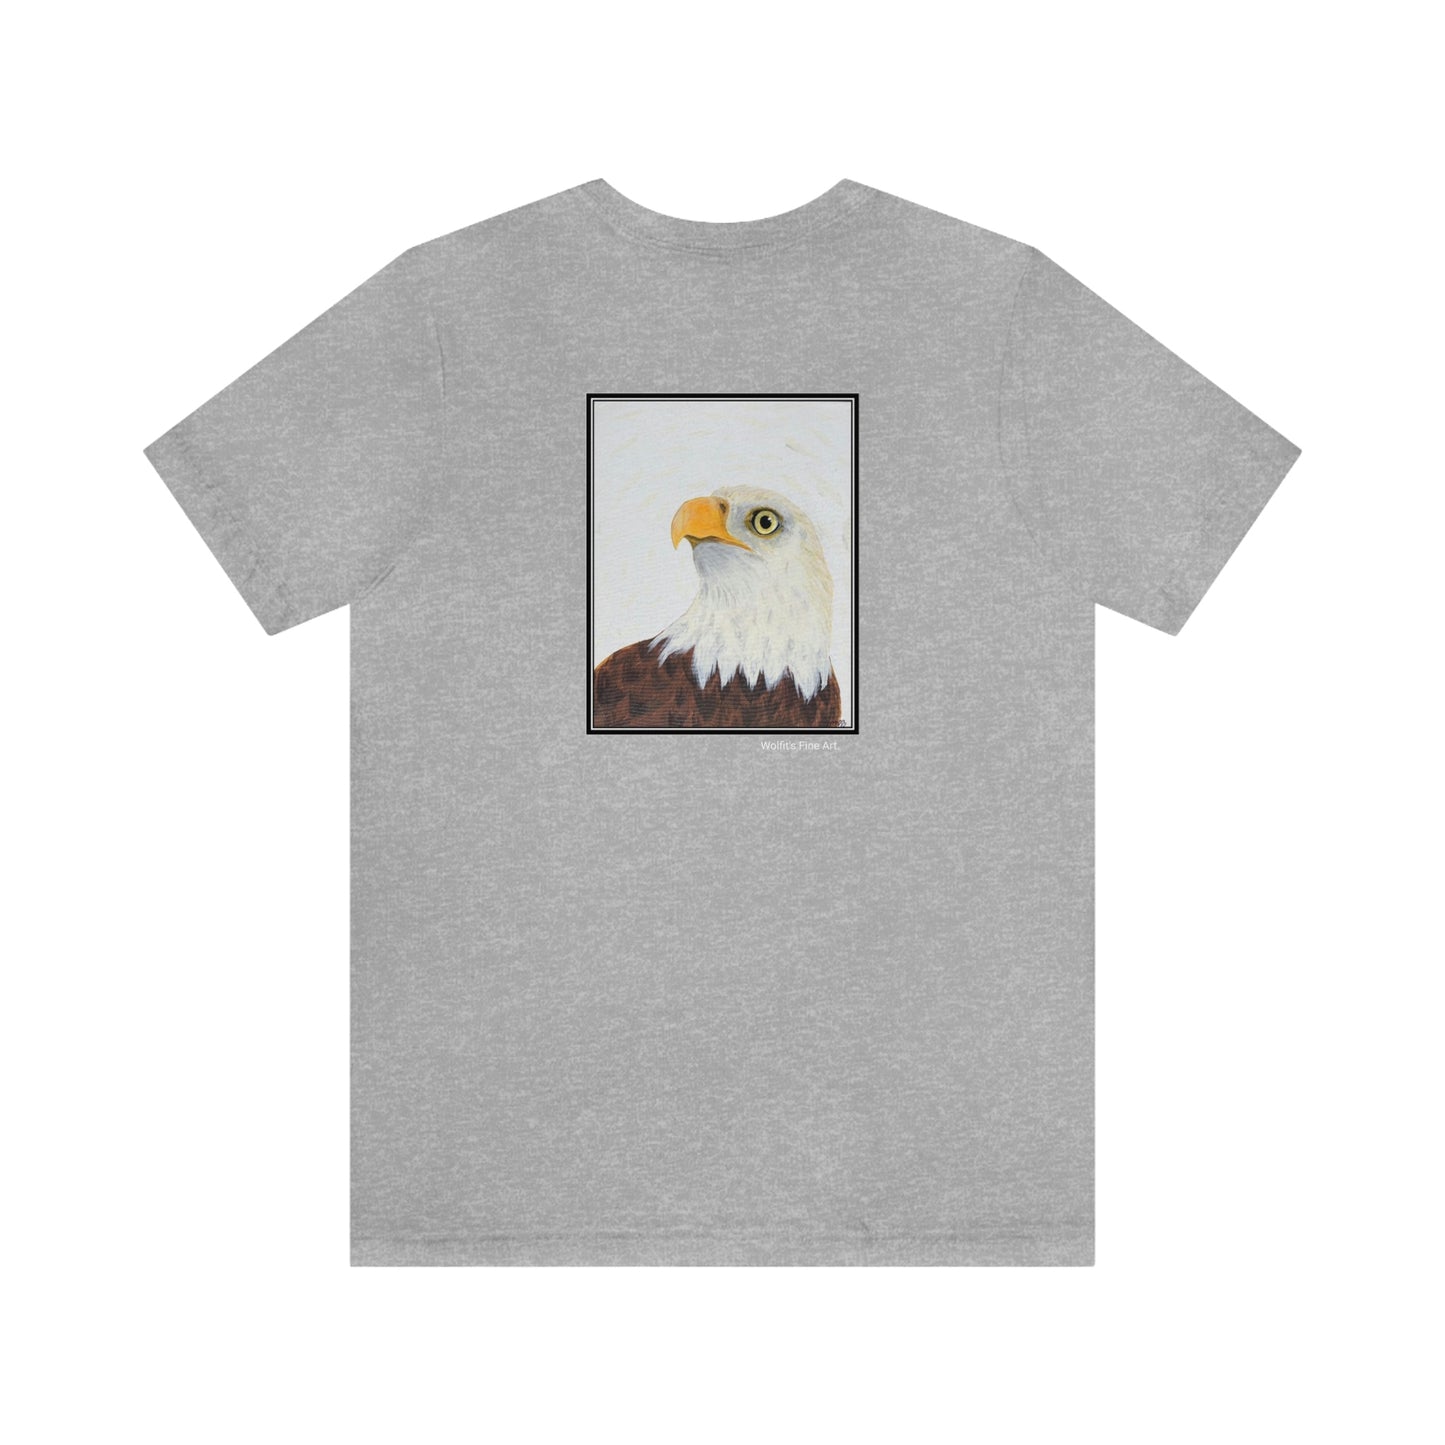 Wolfit's LOGO T-shirt - Bald Eagle